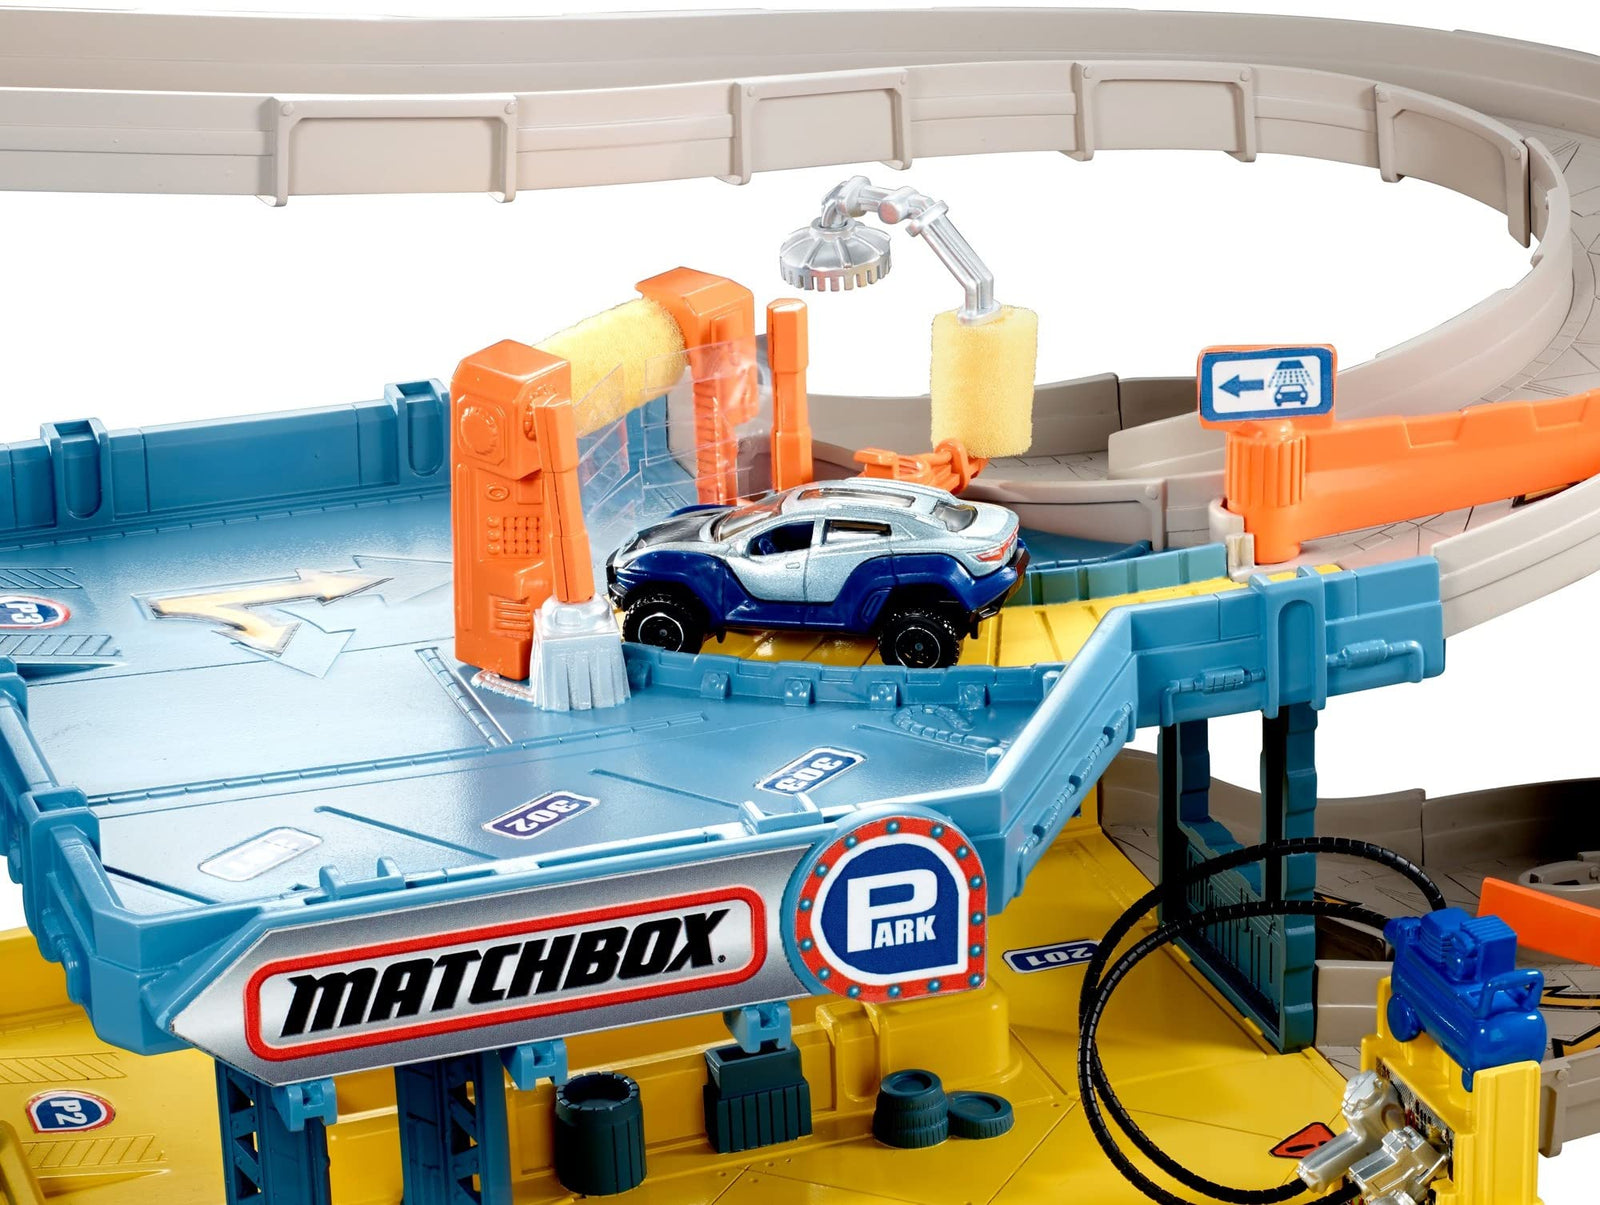 Matchbox 4-Level Garage [Amazon Exclusive]